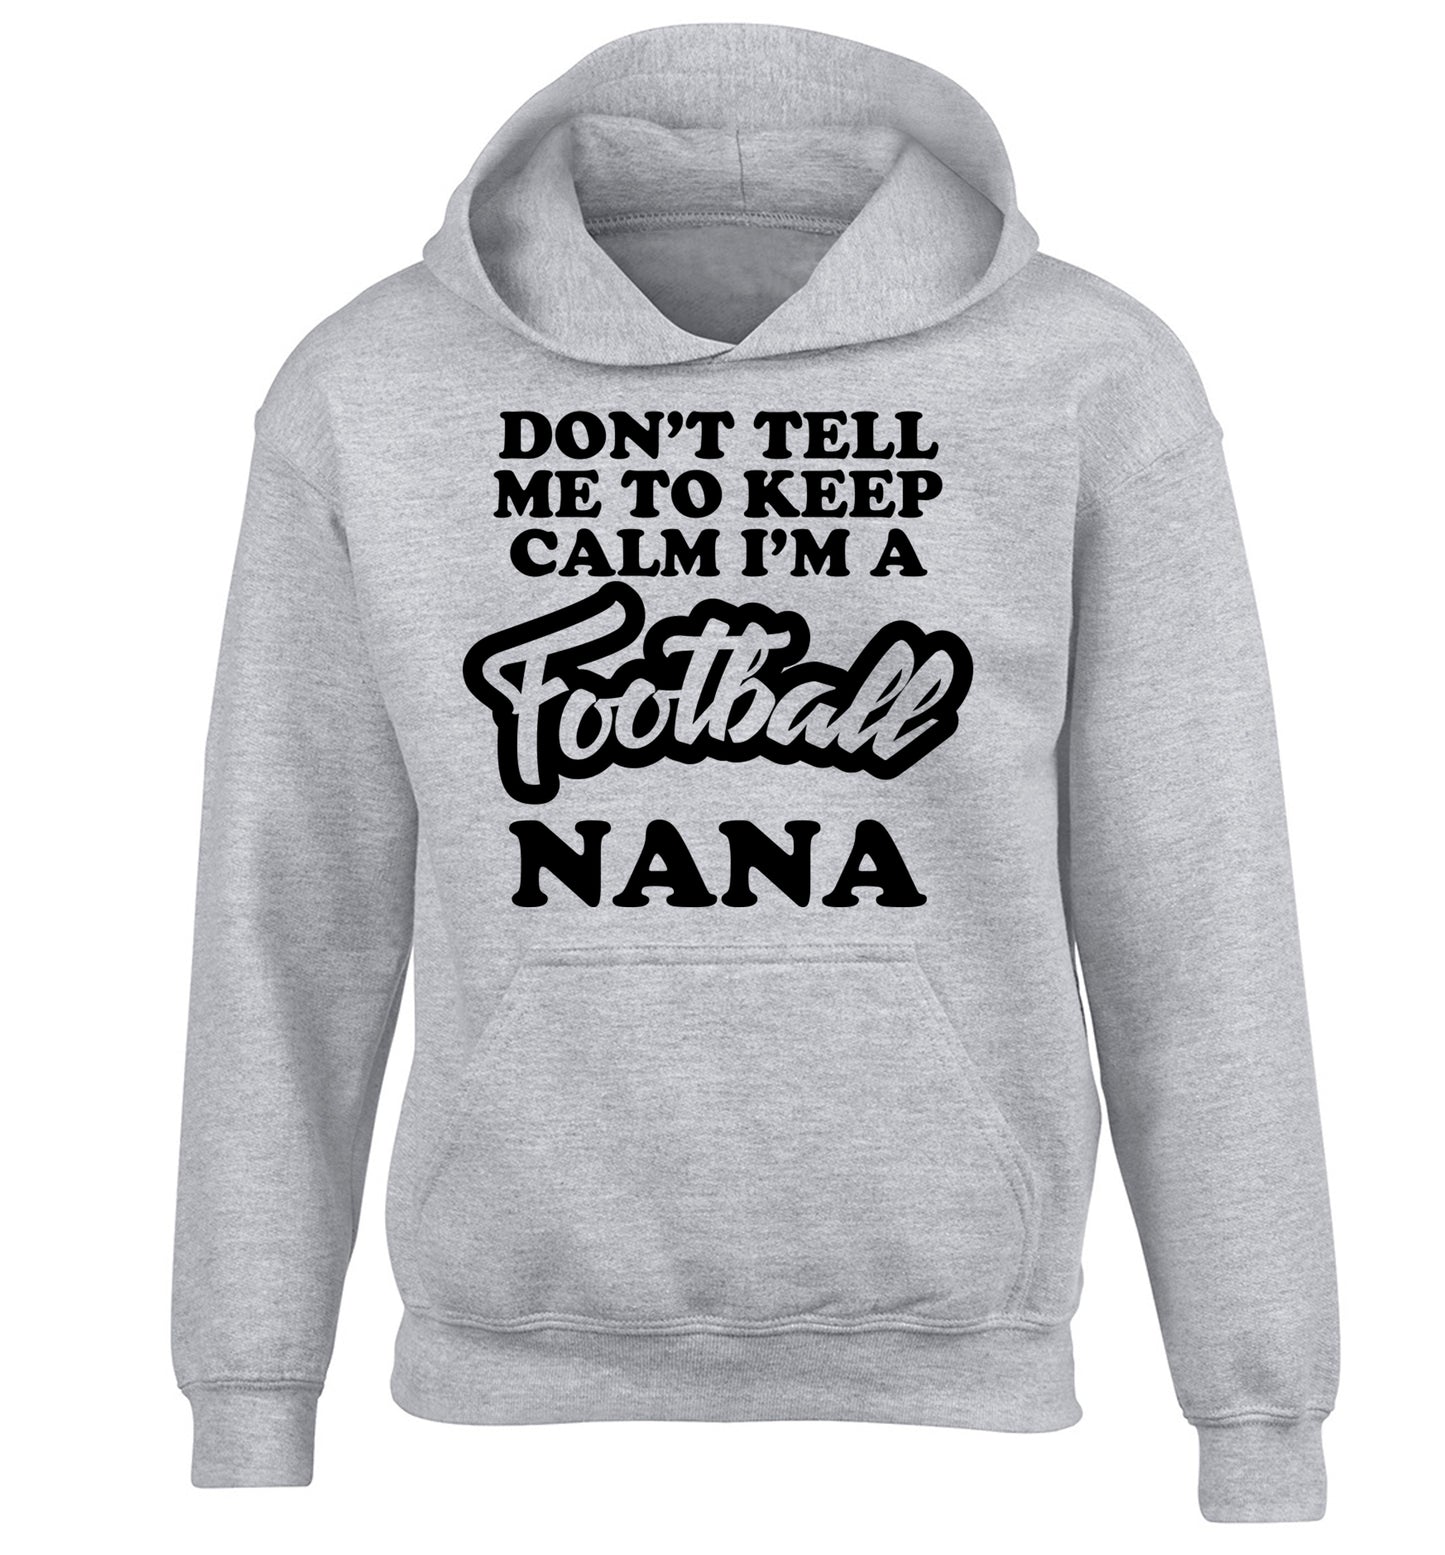 Don't tell me to keep calm I'm a football nana children's grey hoodie 12-14 Years